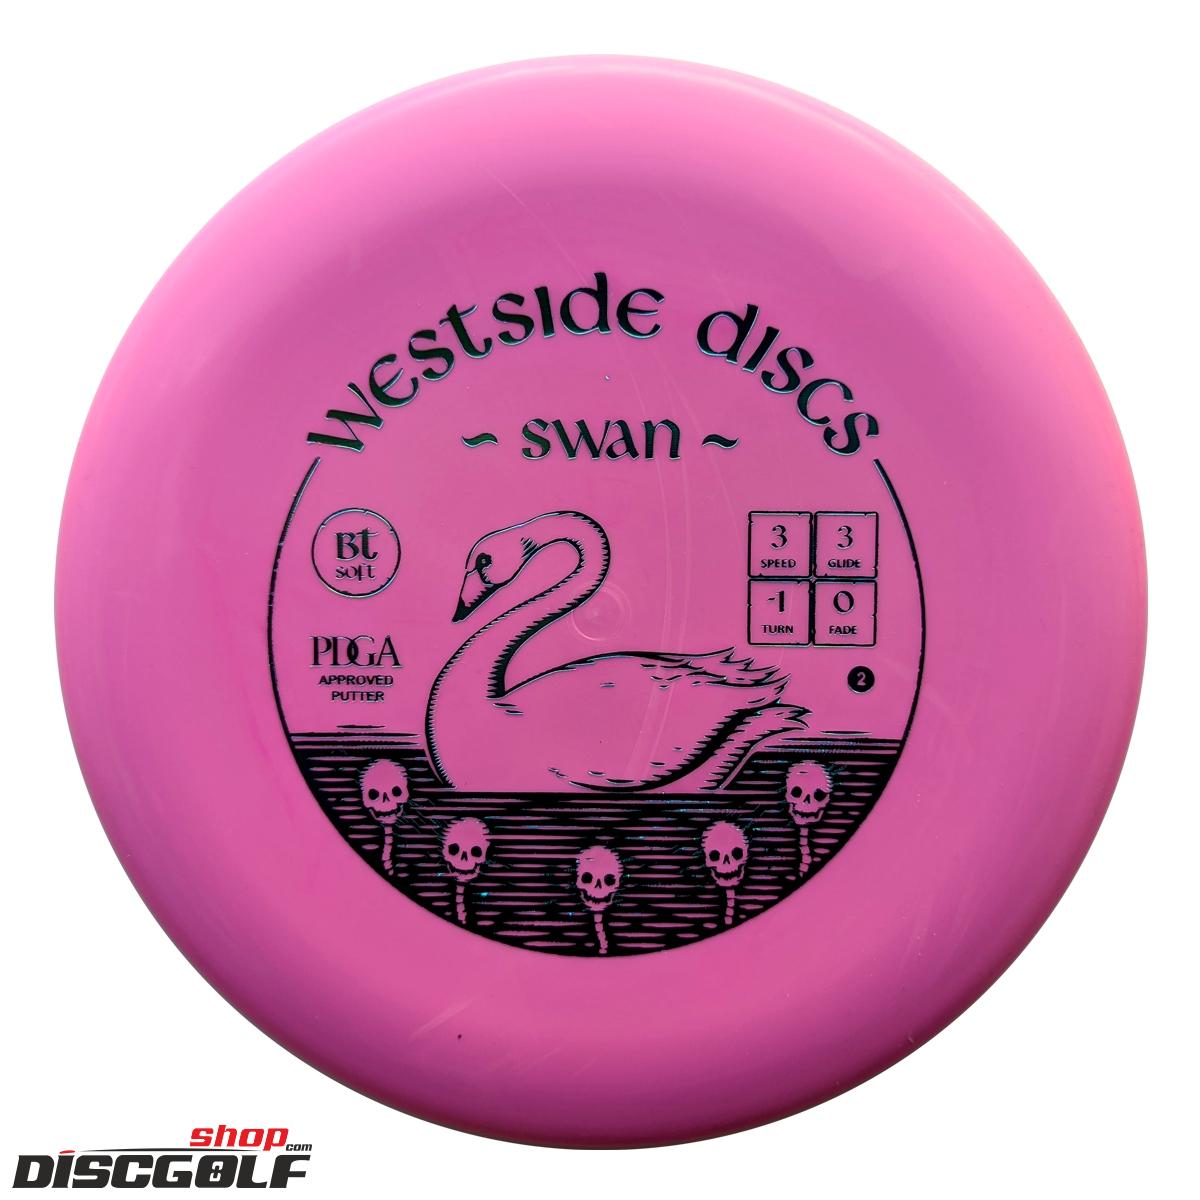 Westside Swan 2 BT Soft 2022 (discgolf)